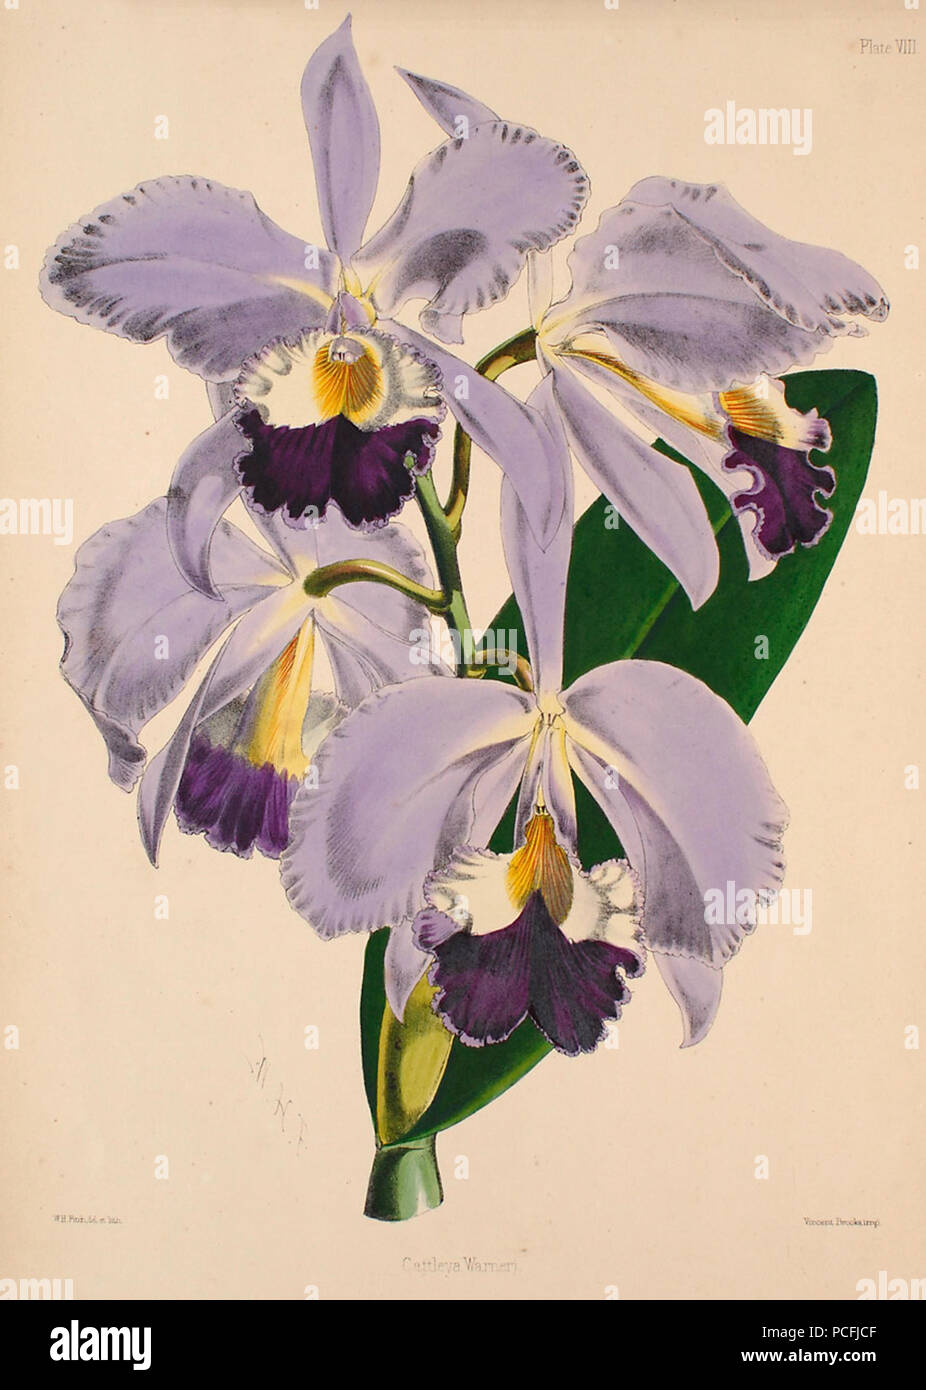 119 Cattleya warneri - Warner, Williams - Select orch. plants 1, pl. 8 (1862-1865) Stock Photo